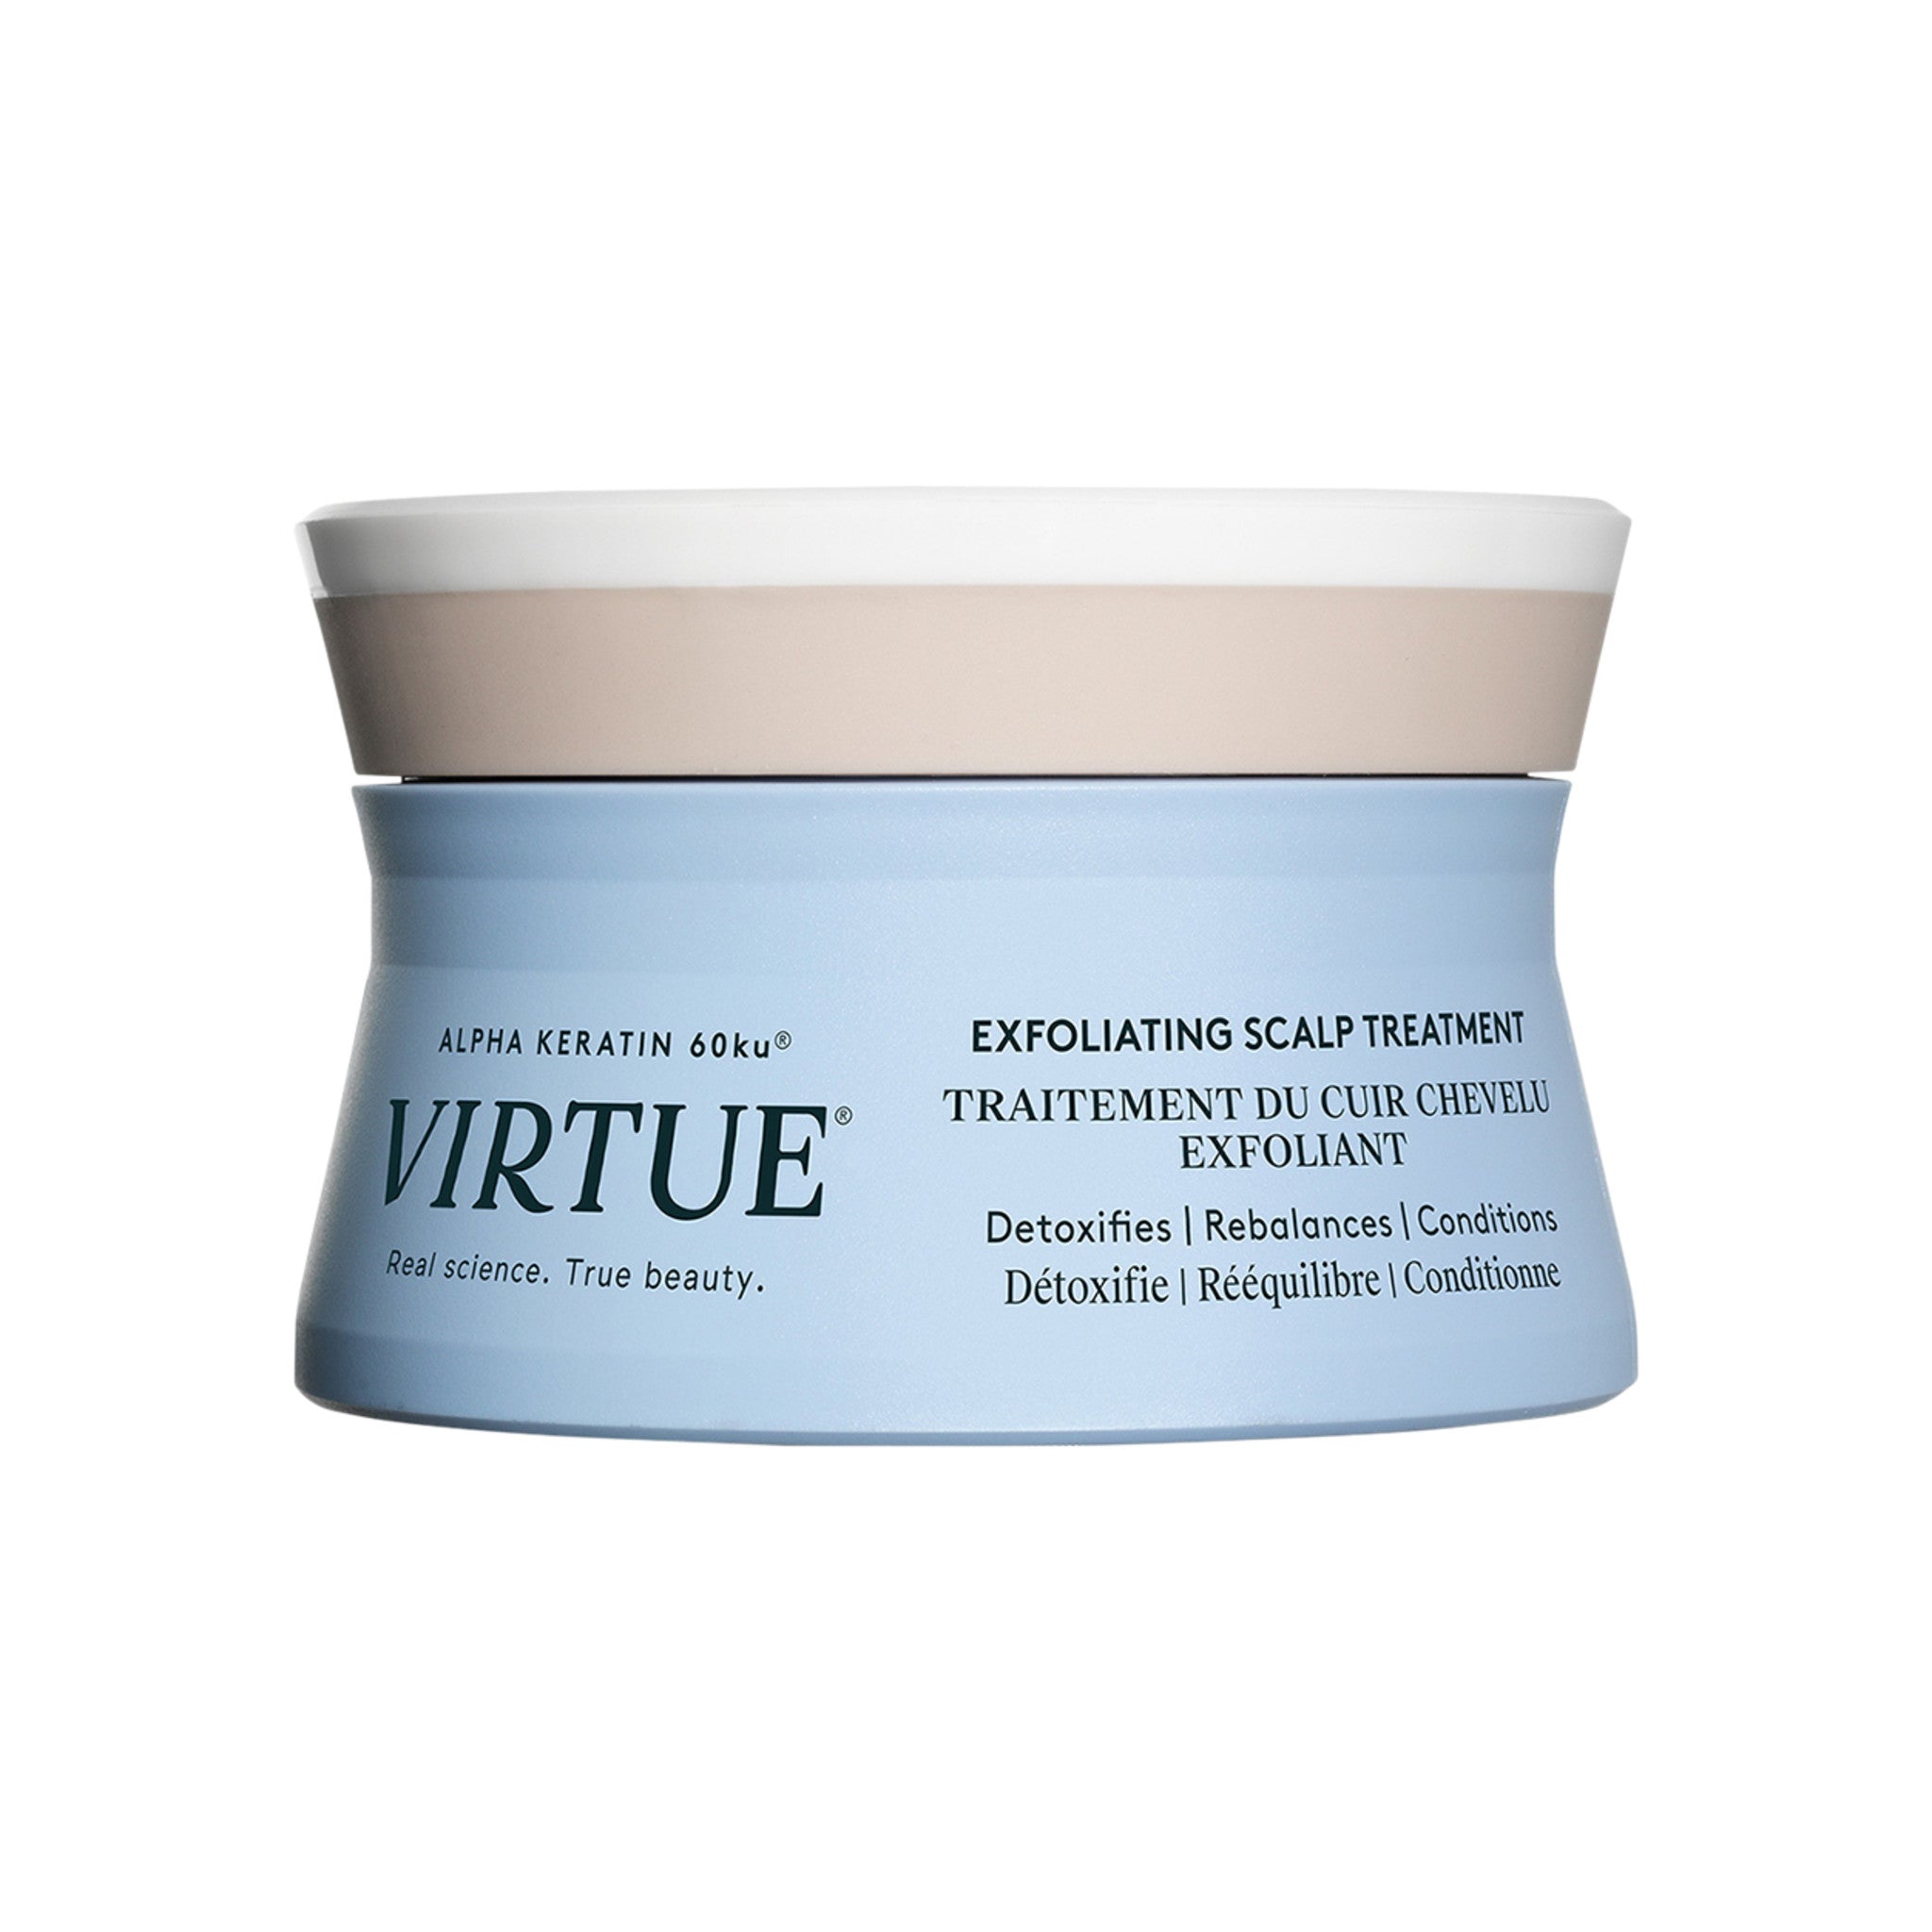 Virtue Refresh Exfoliating Scalp Treatment main image.